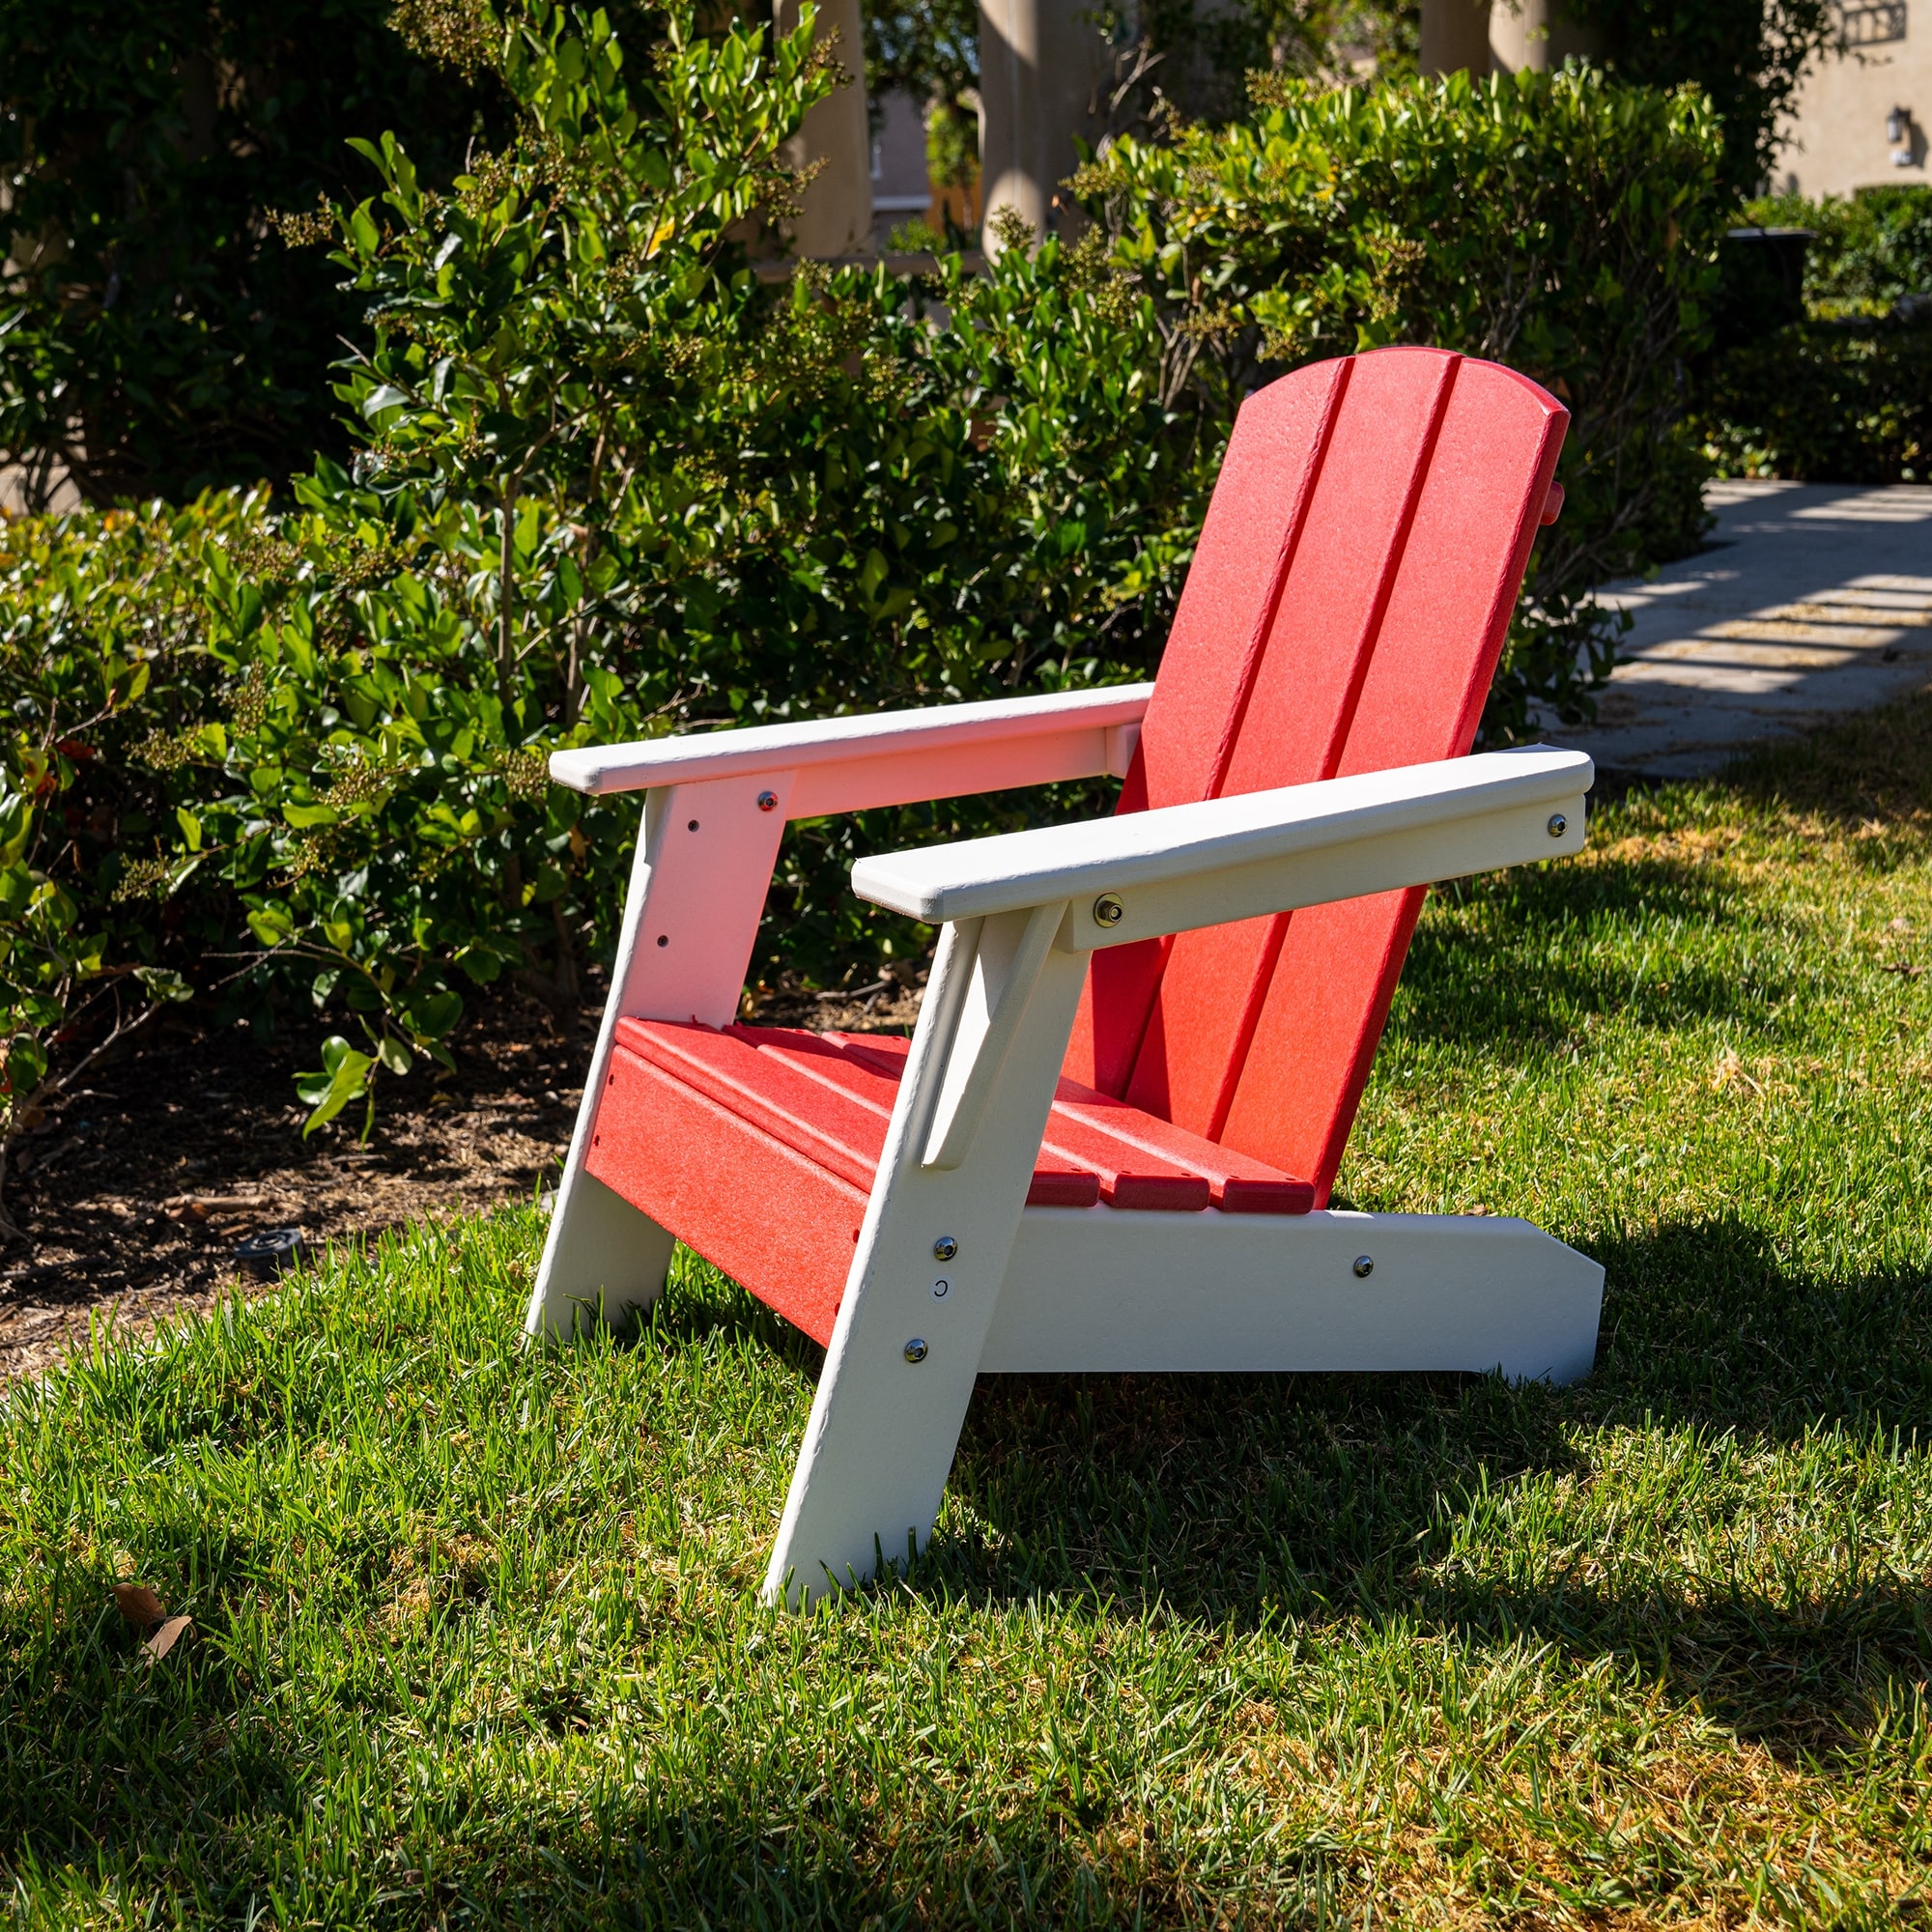 RESINTEAK Child-Size Adirondack Chair White Armrest